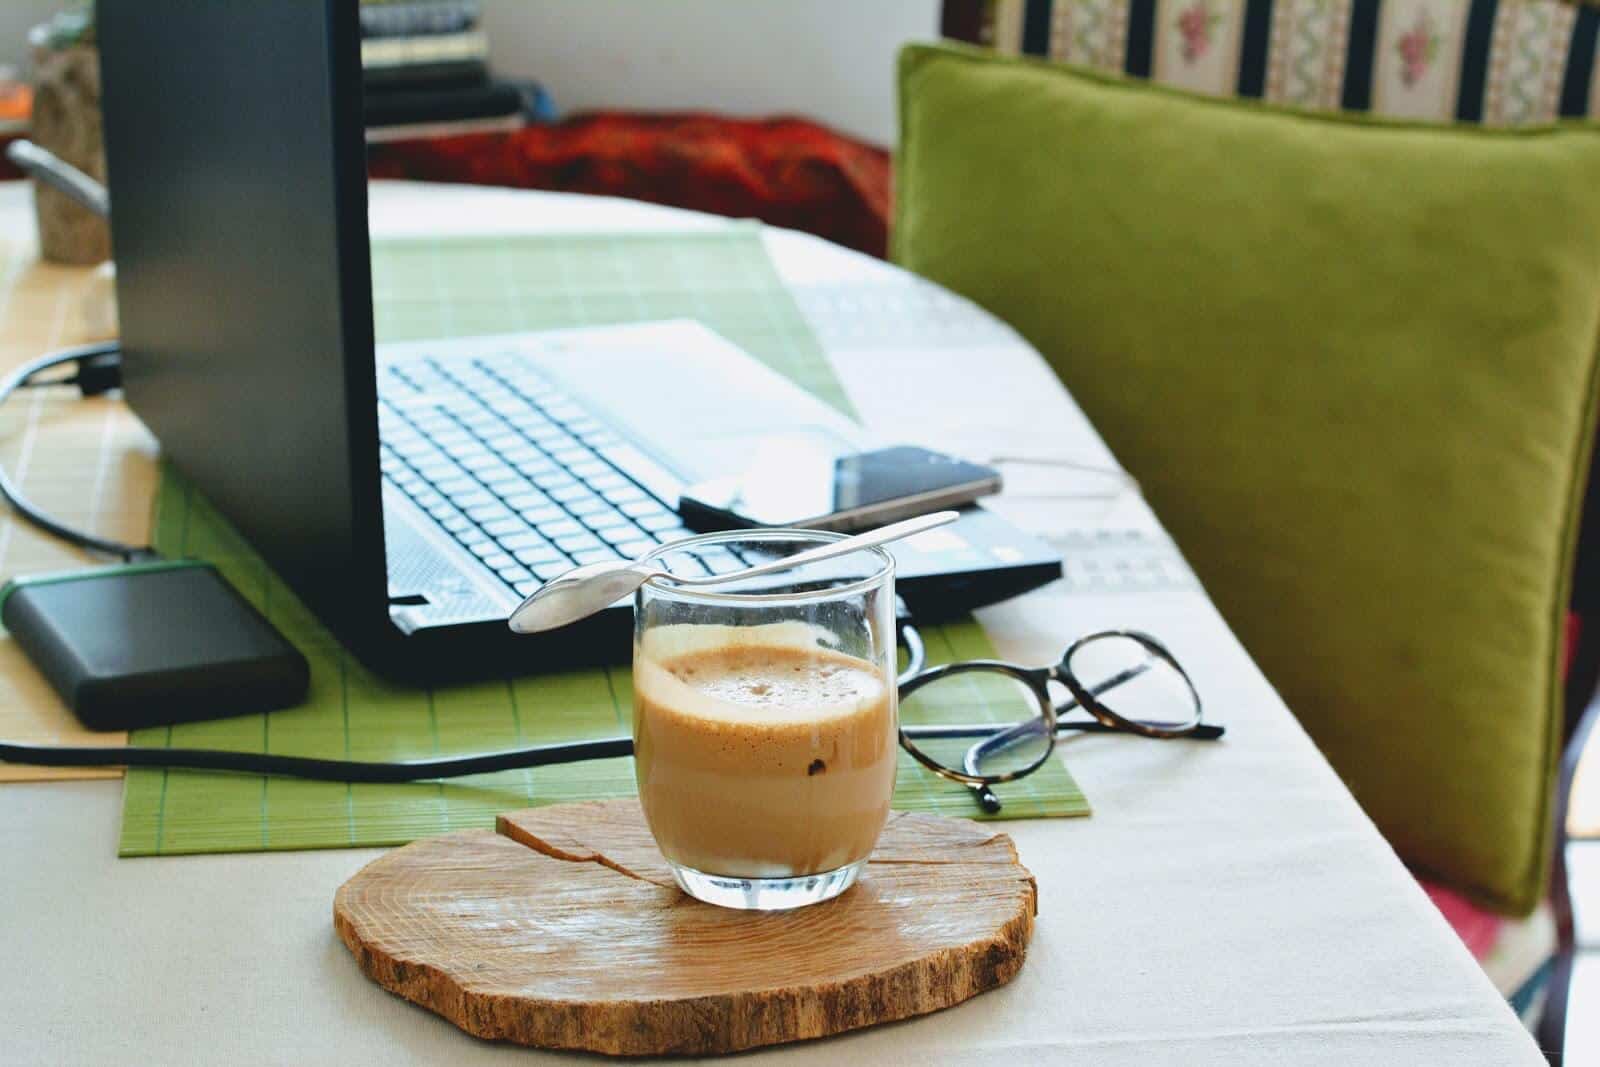 Legitimate work at home jobs: Setup of laptop, phone, coffee, and eyeglasses